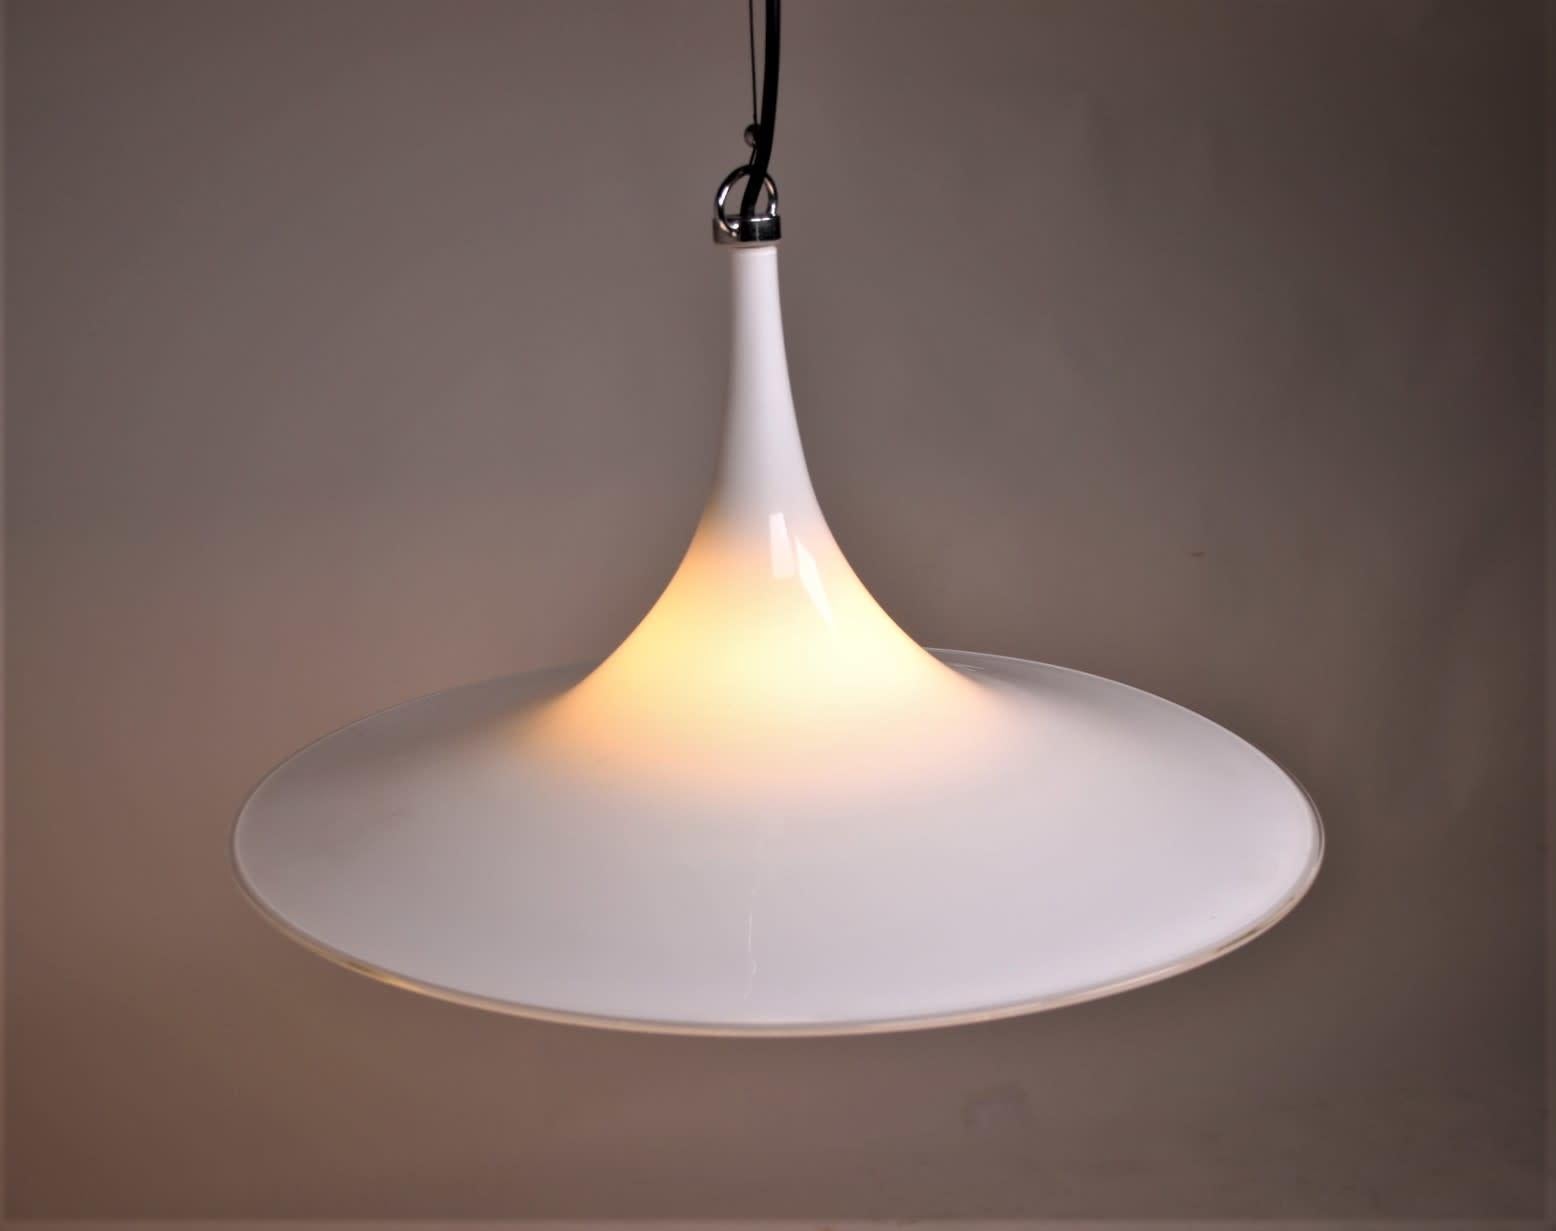 Lino Tagliapietra Pendant Lamp Made by Efferte Magia, 1980 Italy For Sale 1